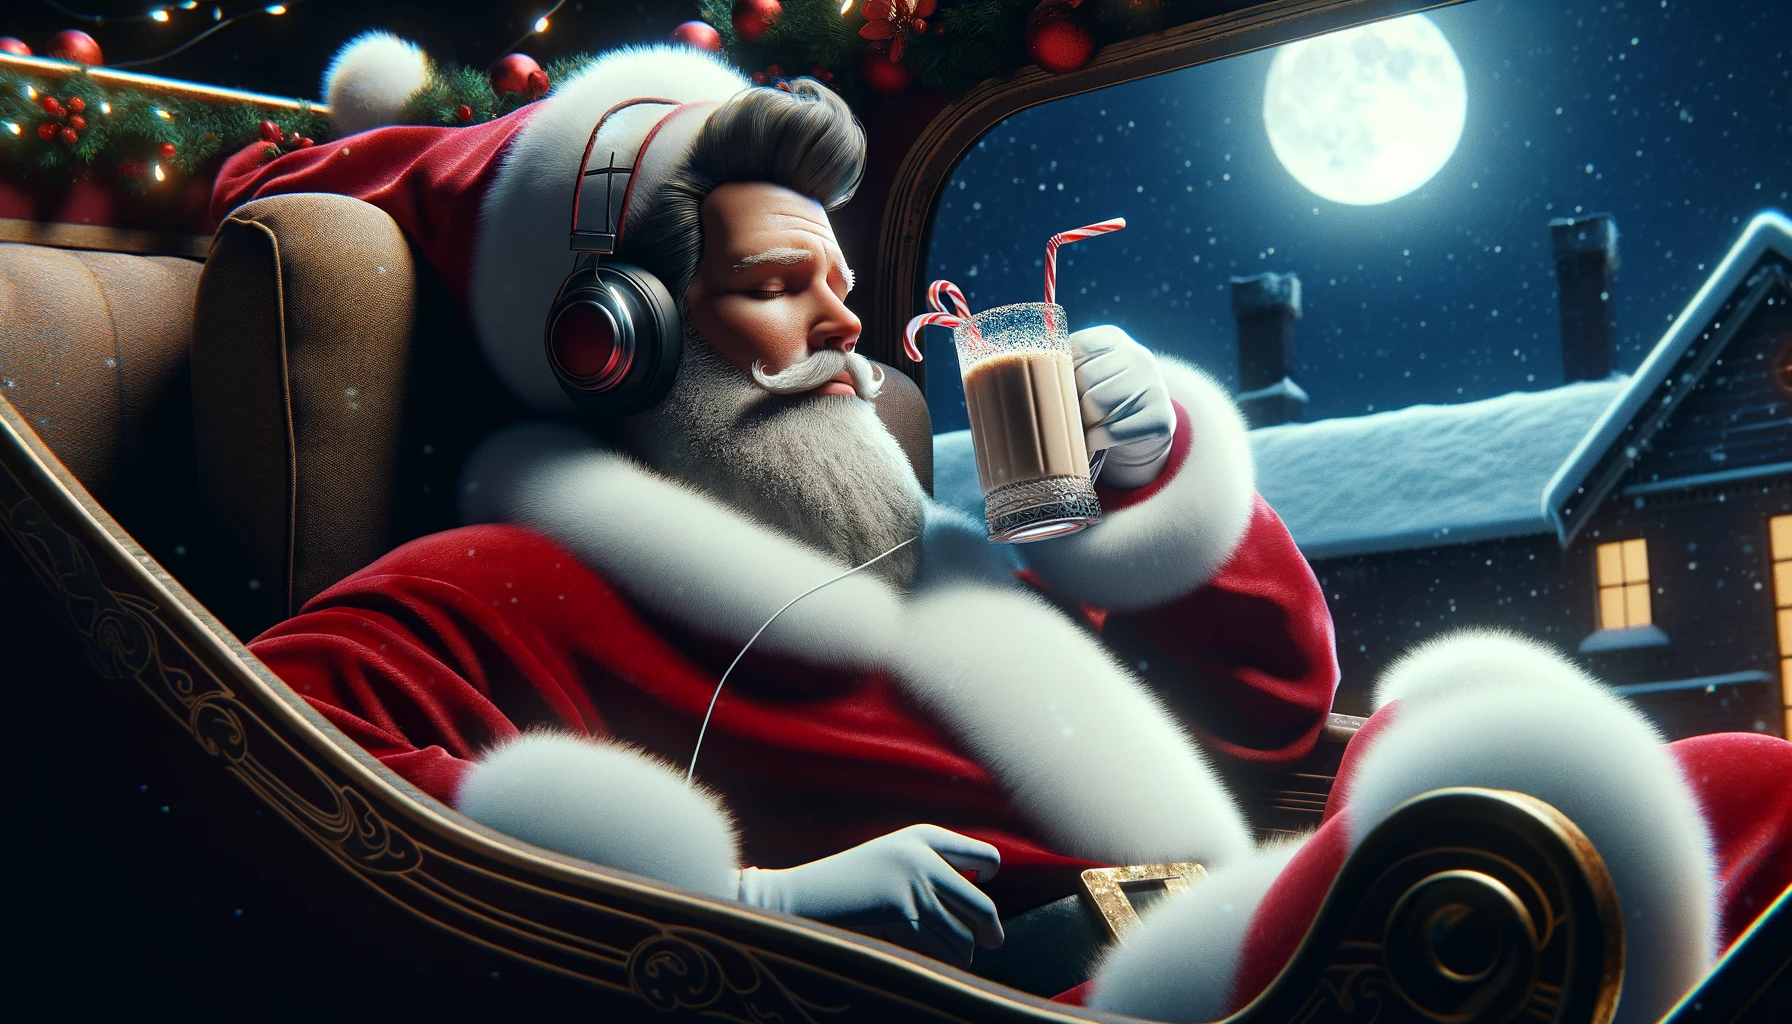 Sad Christmas songs Santa Claus in his sleigh drinking egg nog